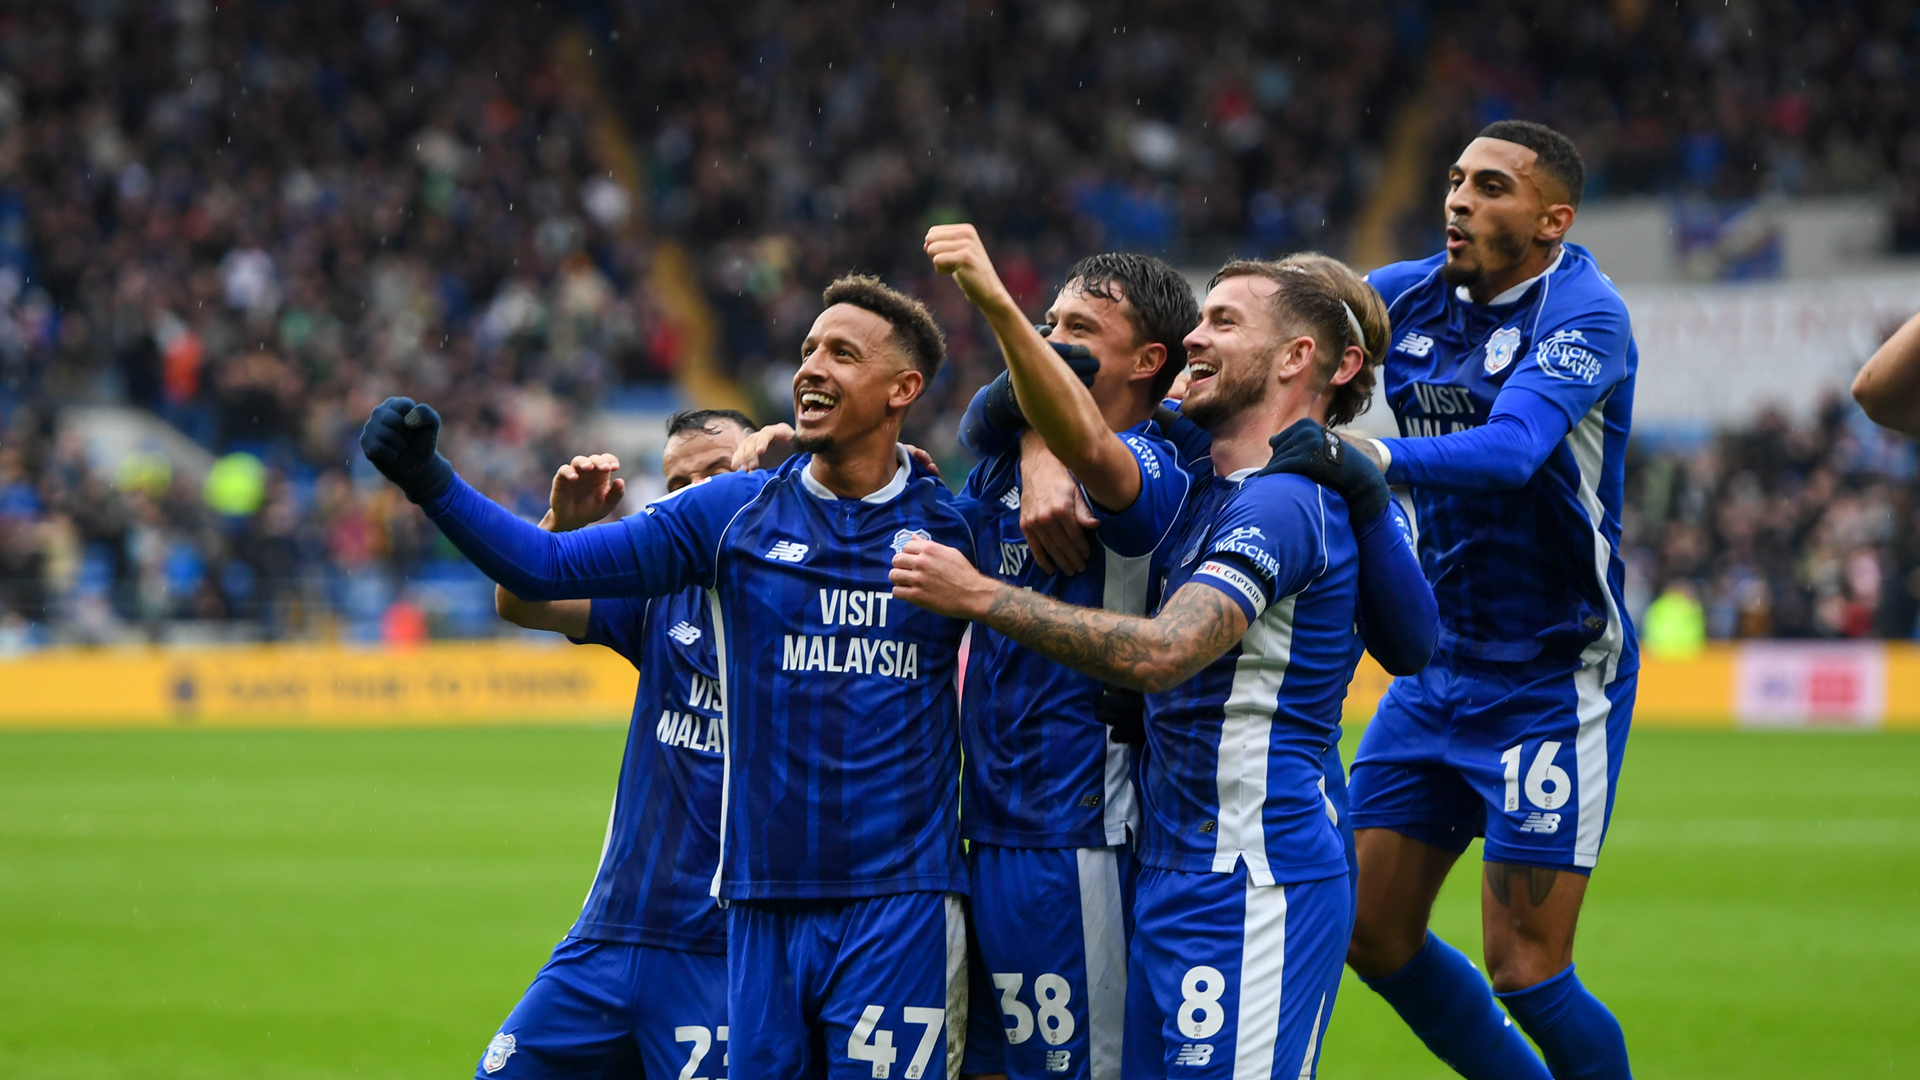 City celebrate after scoring against Bristol City